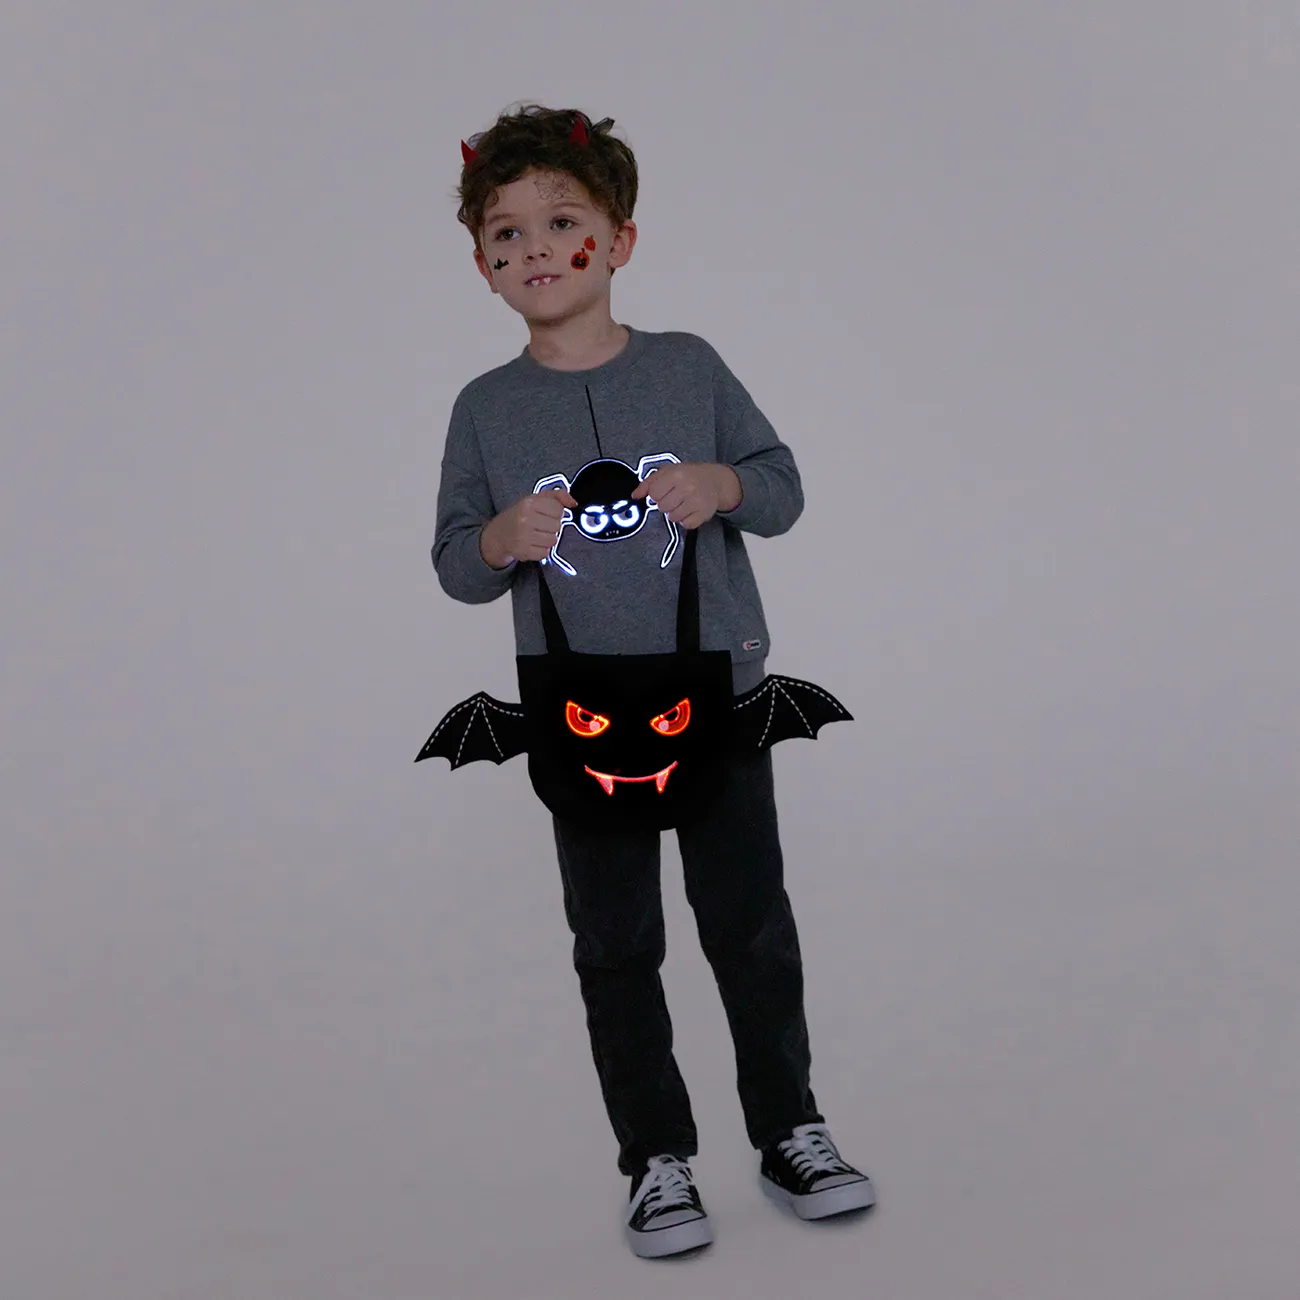 Go-Glow Halloween Light Up Handbag Bat Pattern with Wings Including Controller (Built-In Battery) Black big image 1